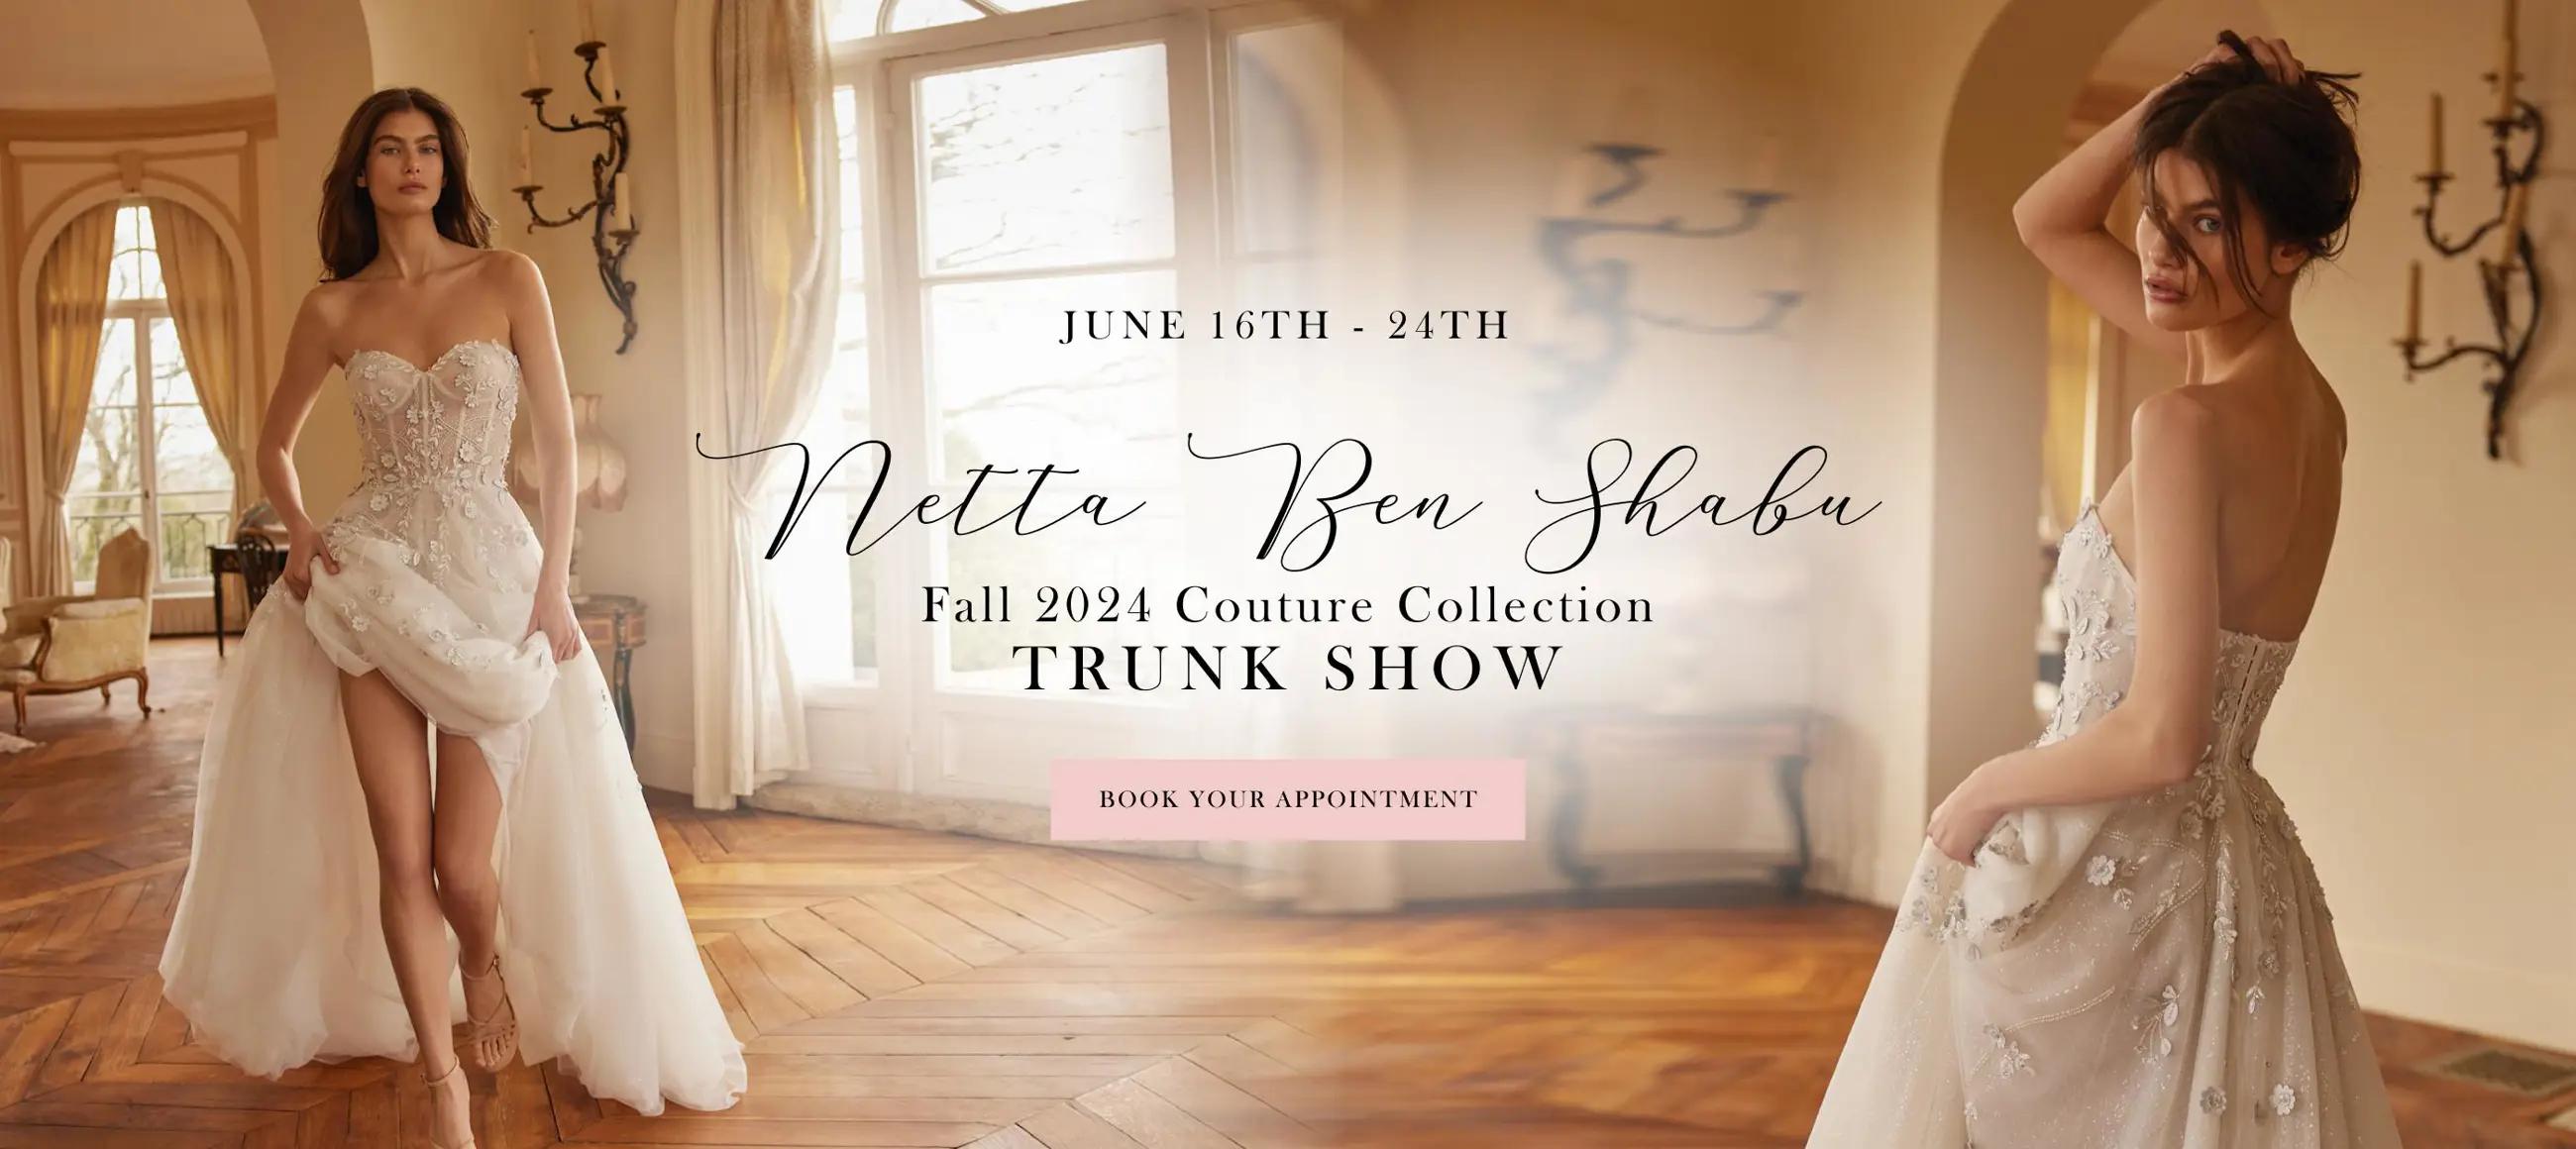 Netta Ben Shabu - Fall 2024 Couture Collection Trunk Show Banner